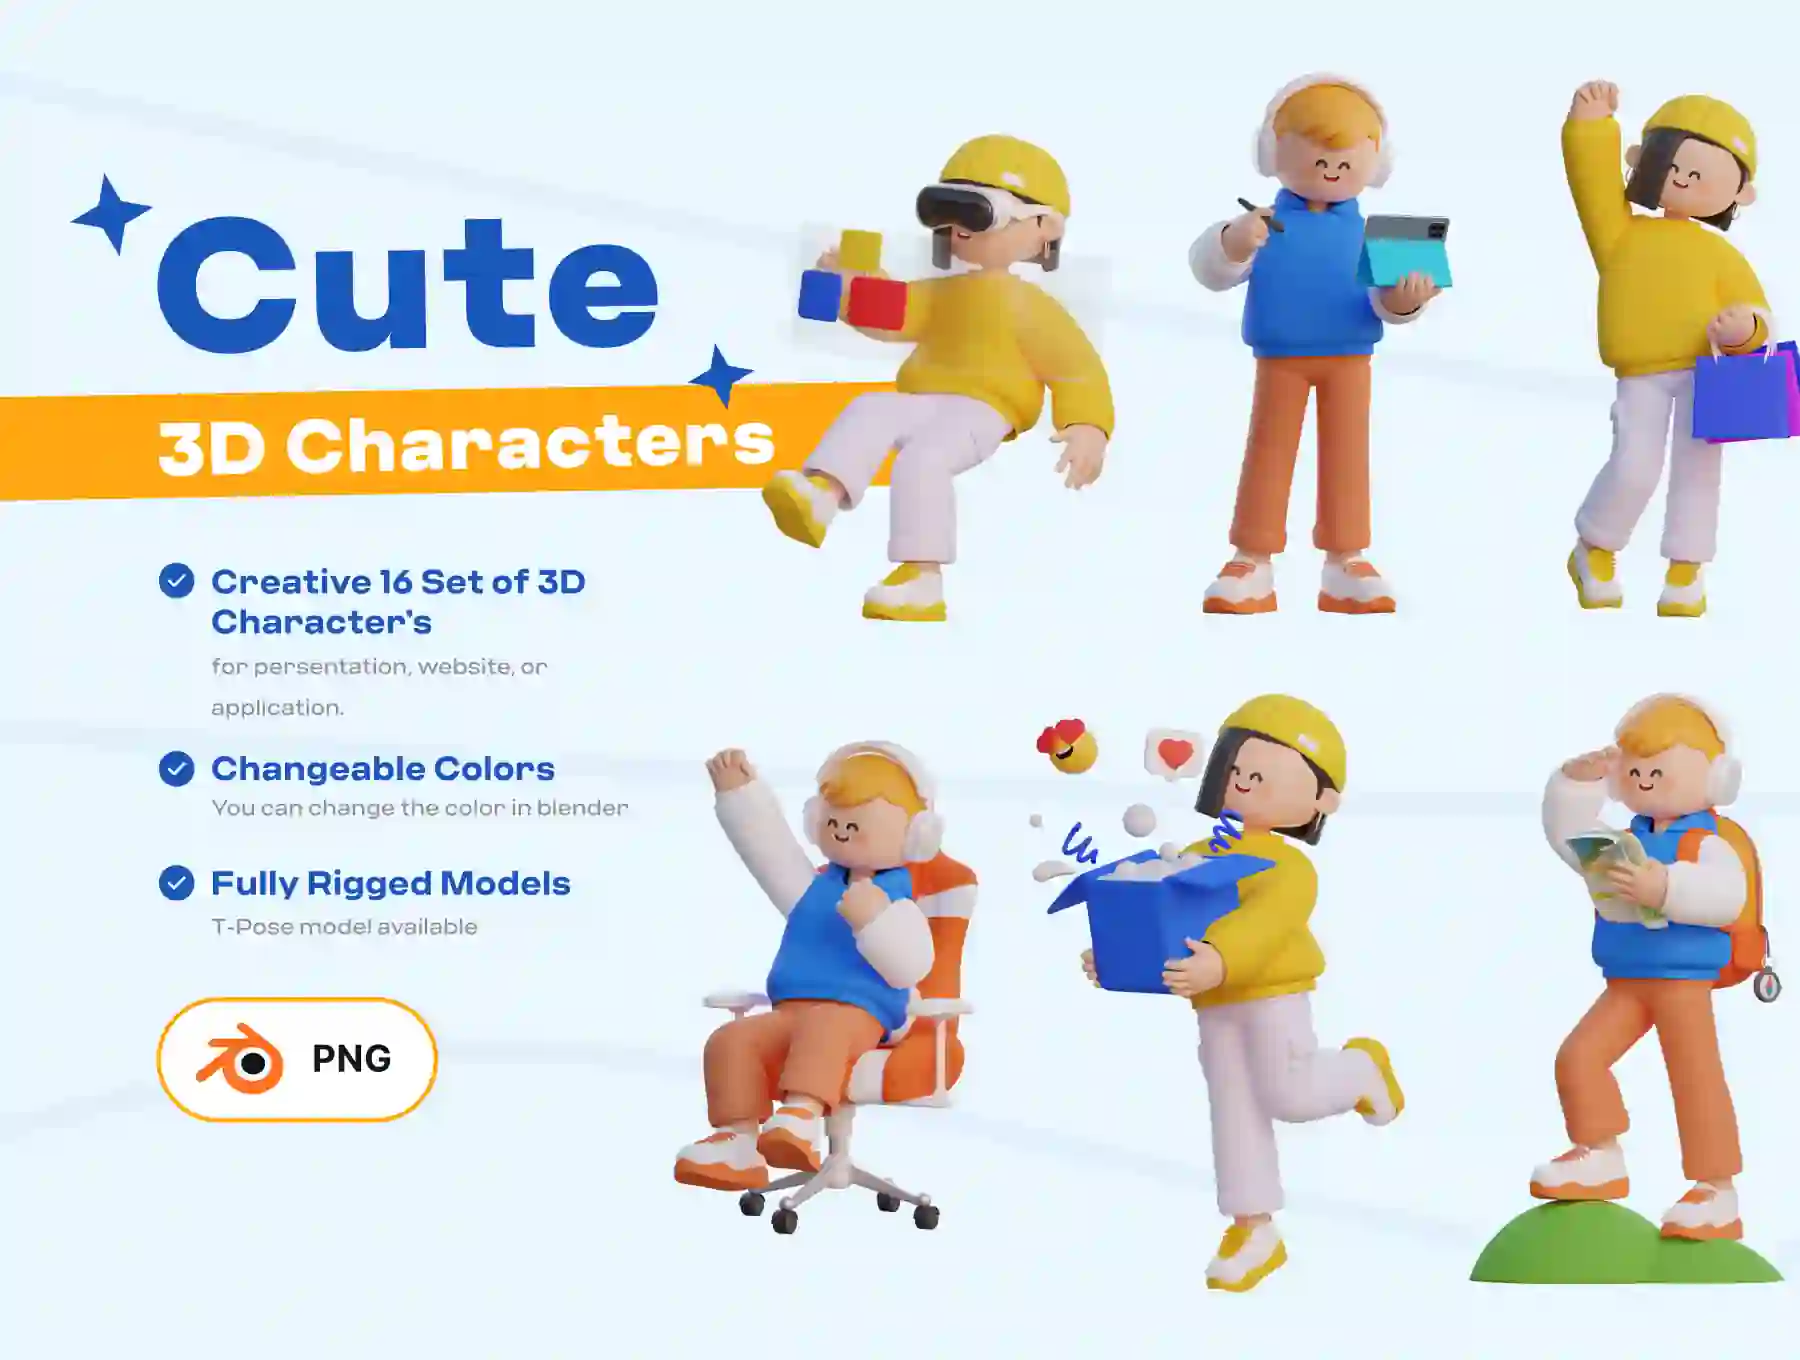 Cute 3D characters